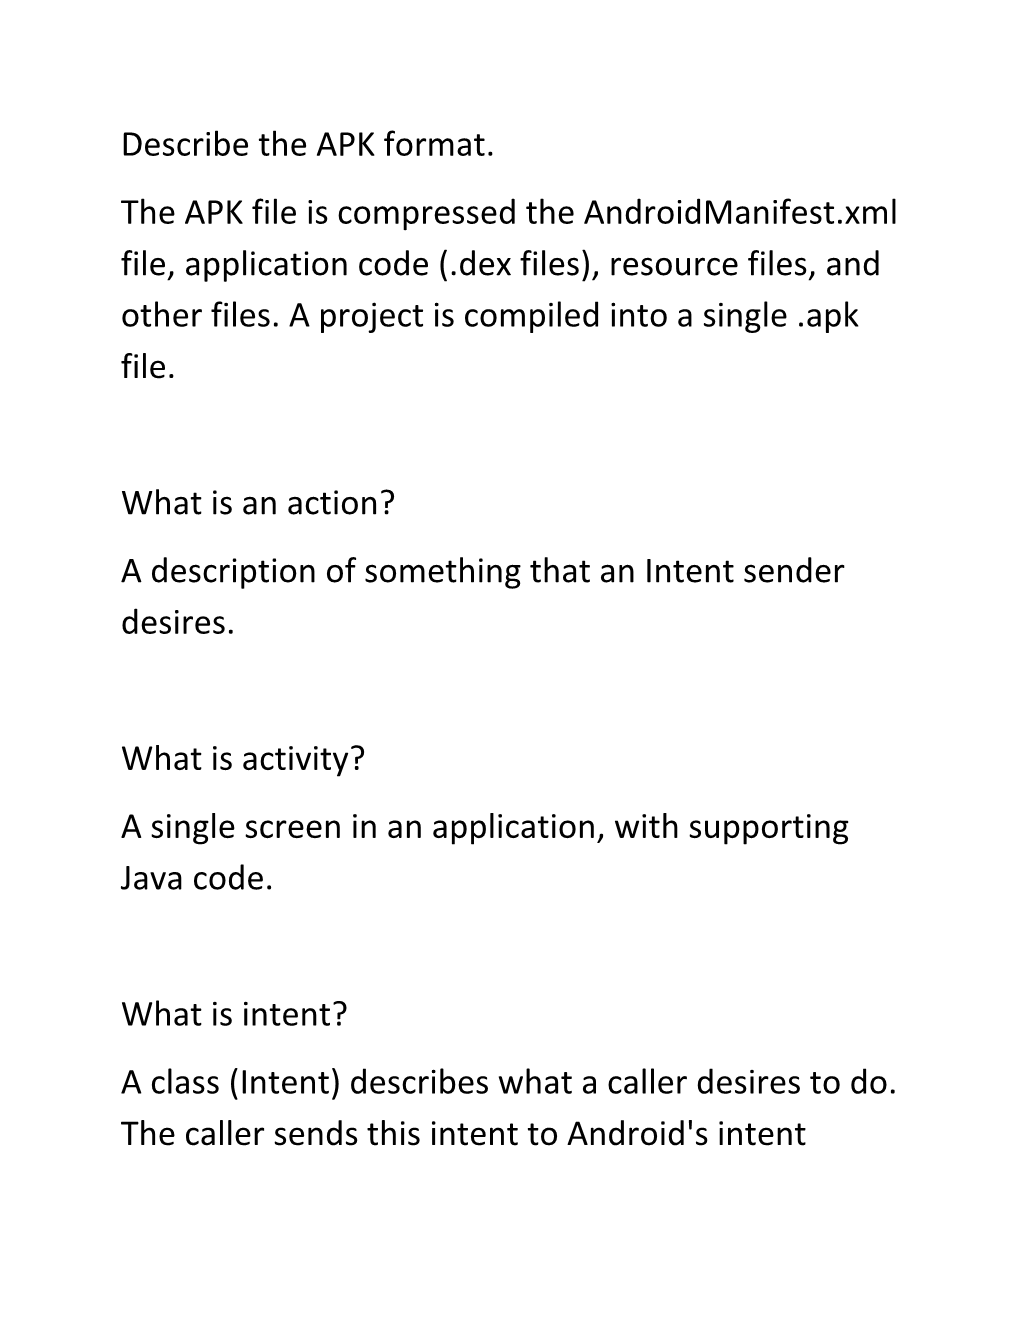 Describe the APK Format